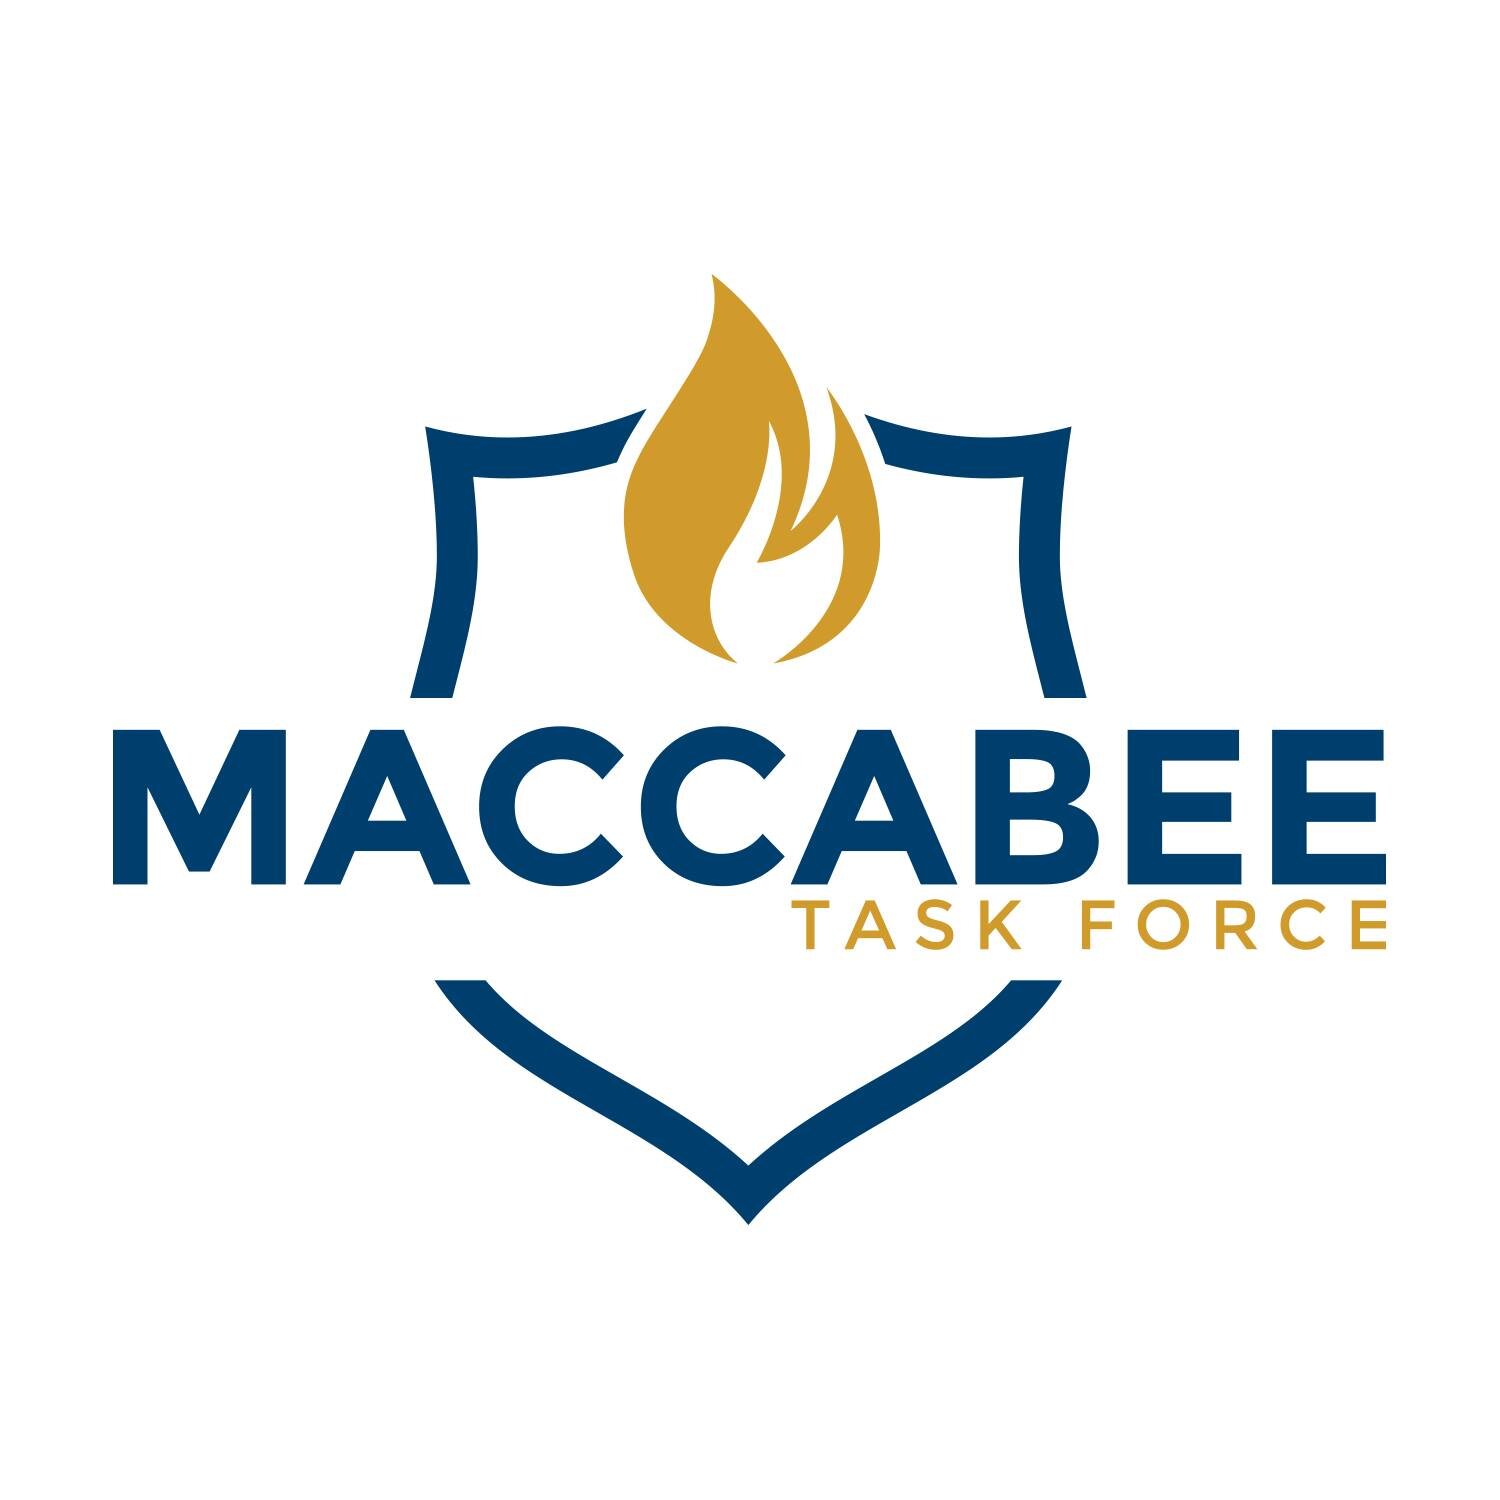 Maccabbe Task Force